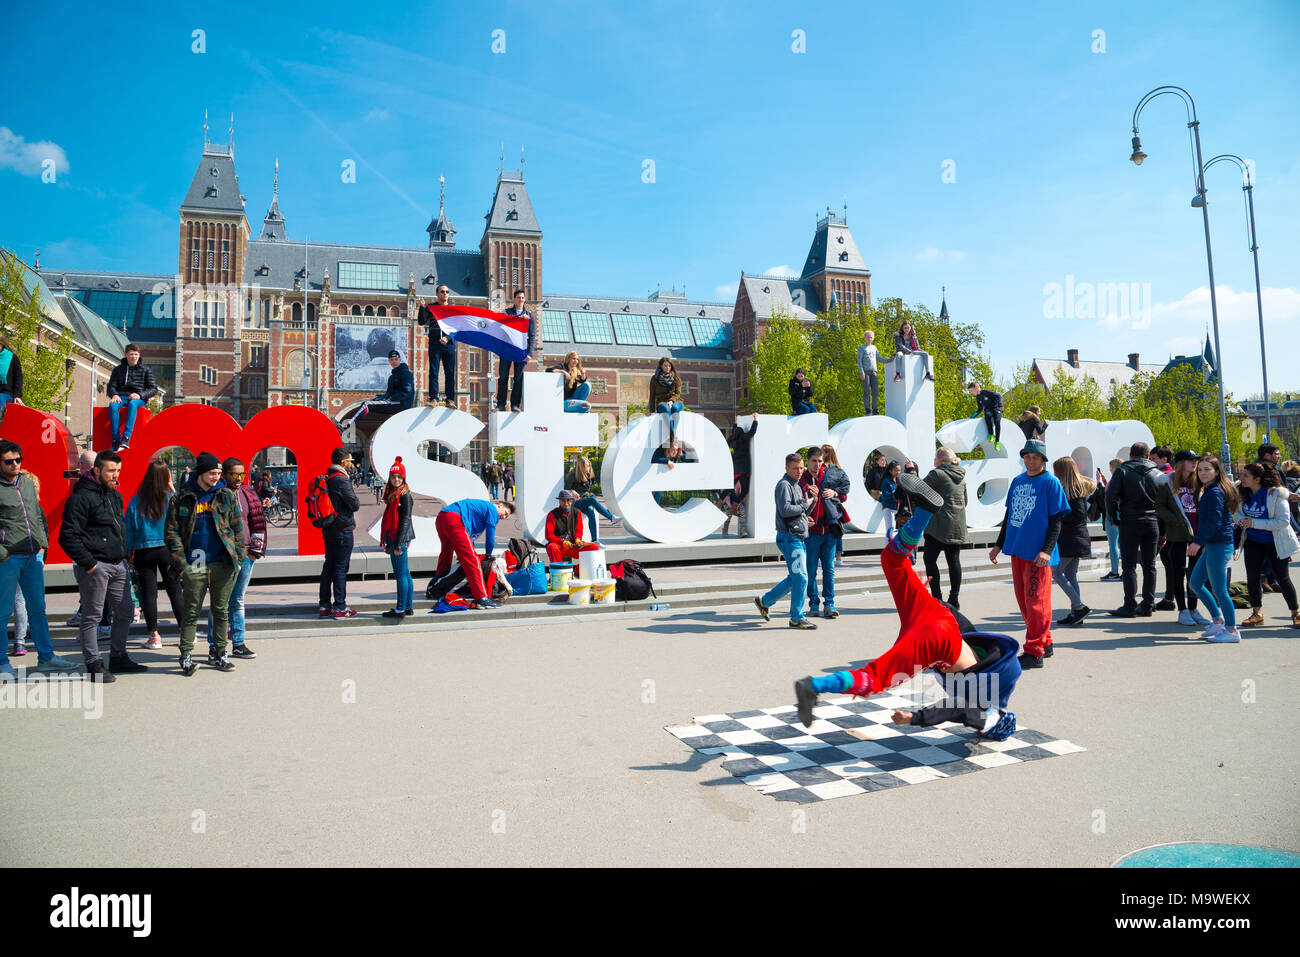 Amsterdam, Netherlands - April 20, 2017: Youth break dancing on city streets in Amsterdam. Street festival breakdance. Stock Photo